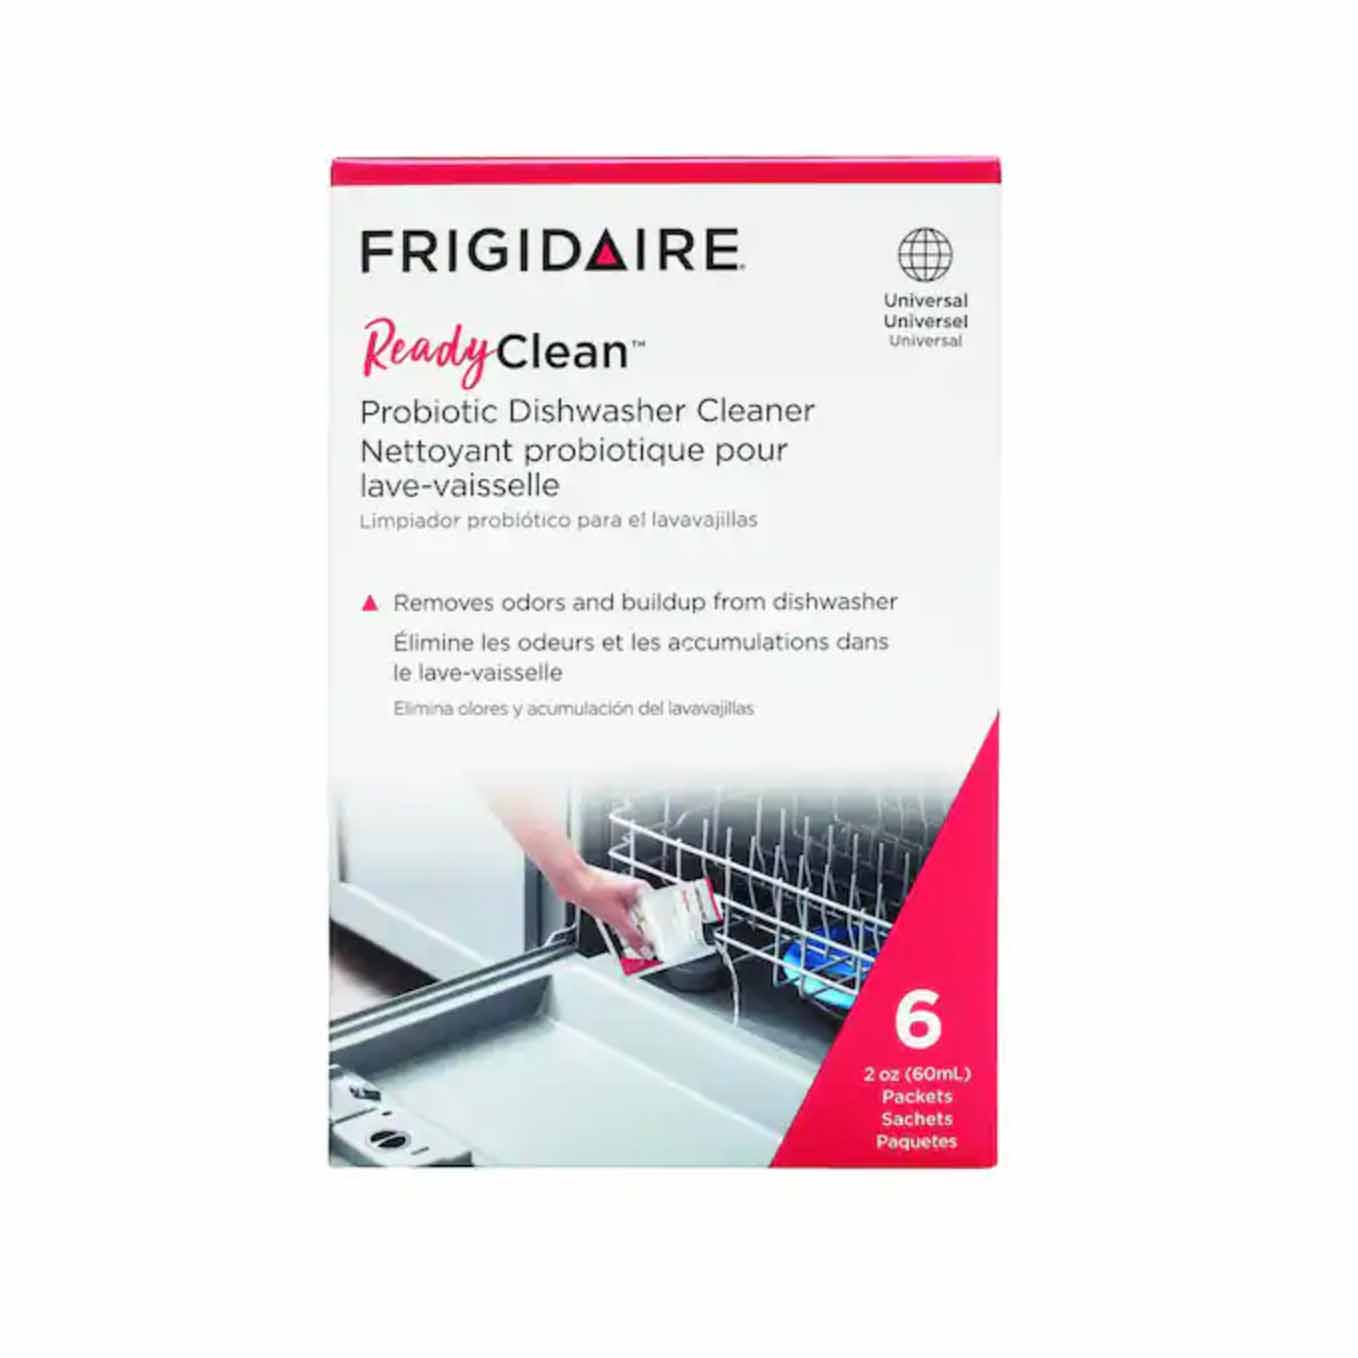 Frigidaire ReadyClean Probiotic Dishwasher Cleaner